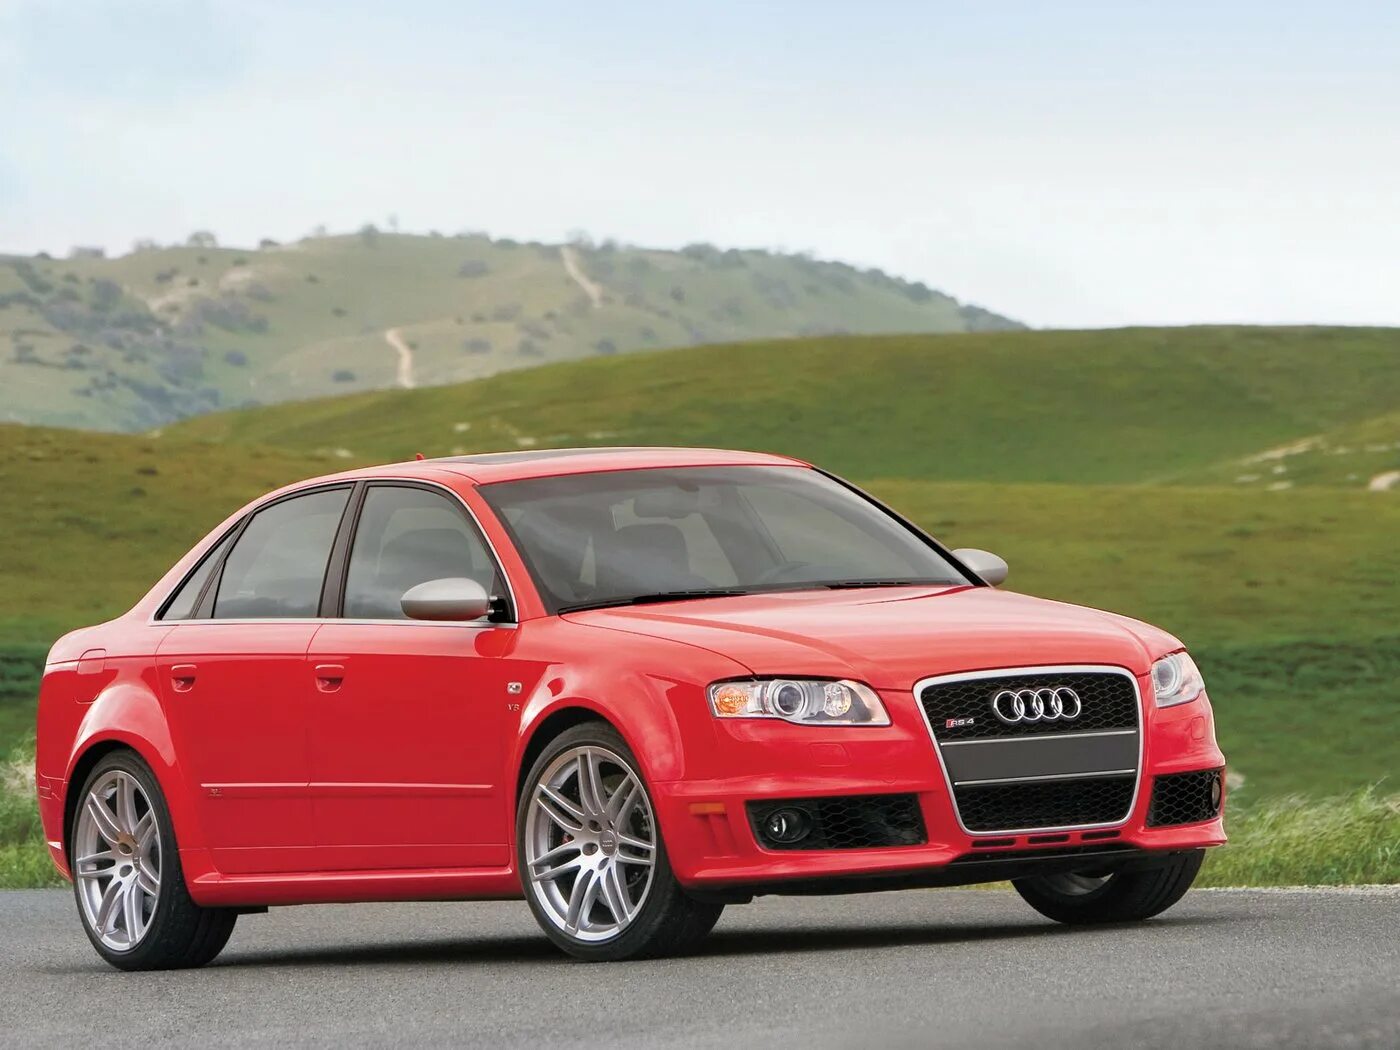 Картинки а4. Ауди RS 4 2008. Audi rs4 седан. Ауди РС 4 2006 седан. Audi rs4 sedan 2006.